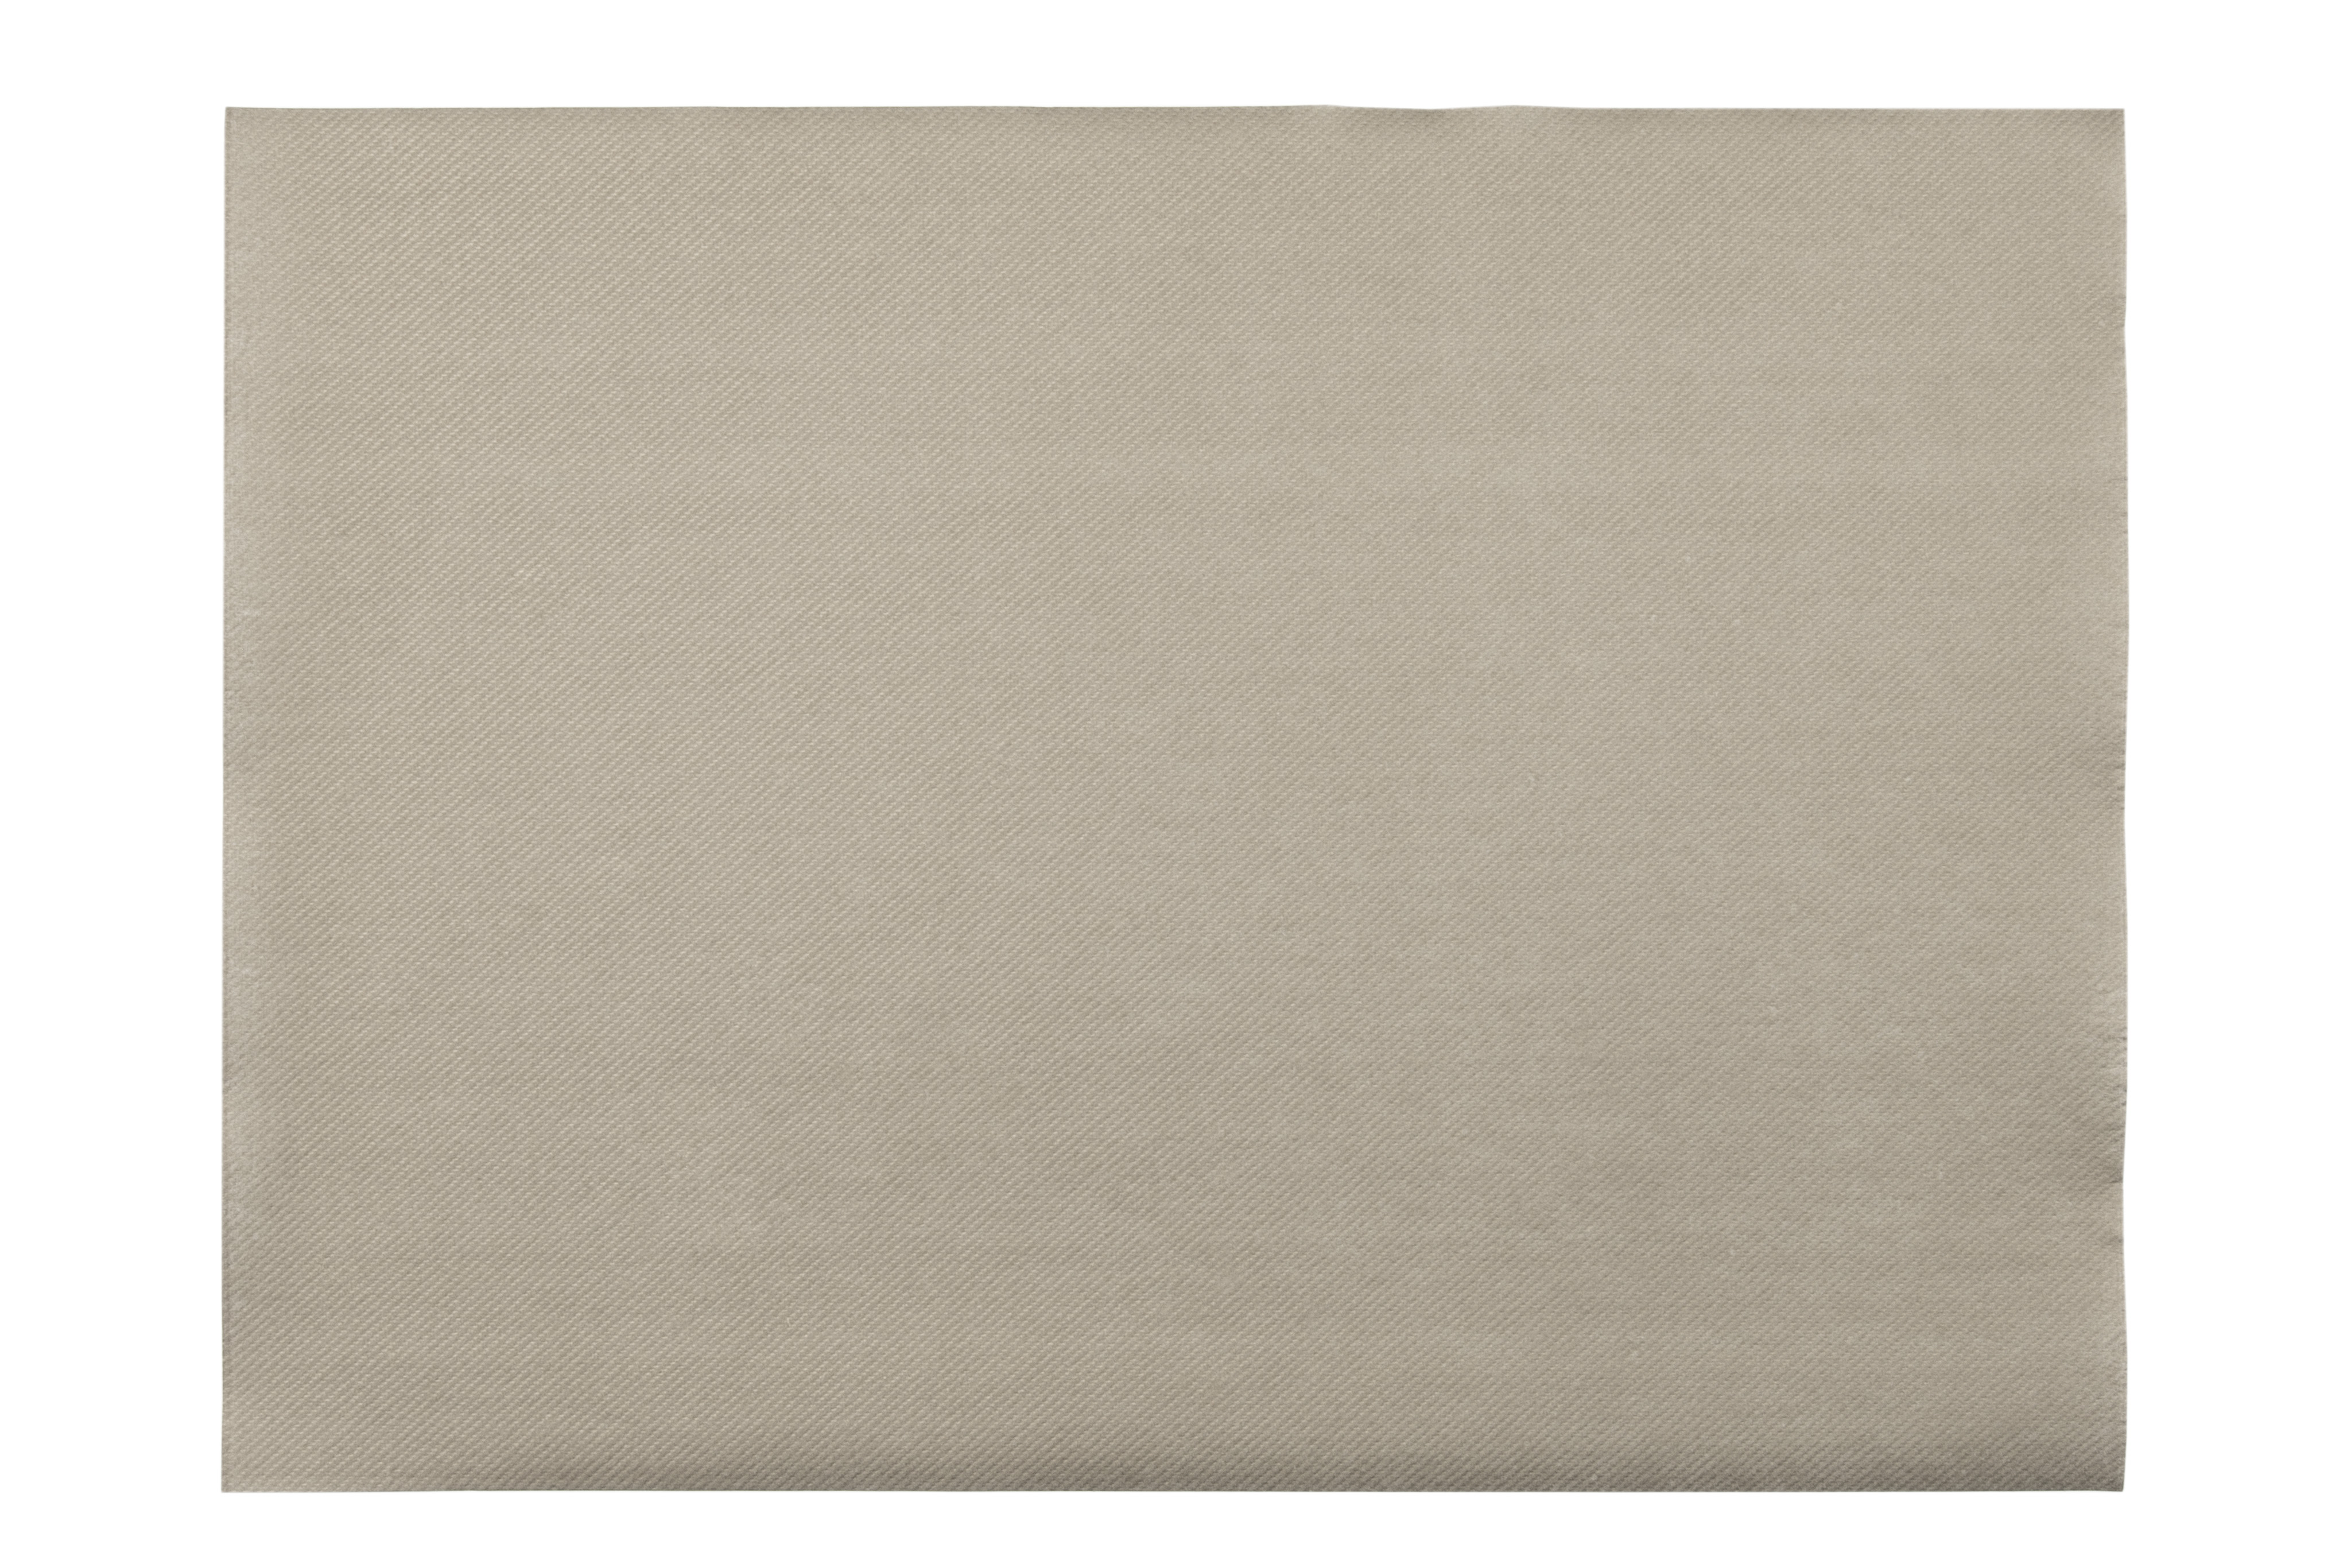 Mank Tischsets Linclass 40 x 30 cm, Basic beige grey